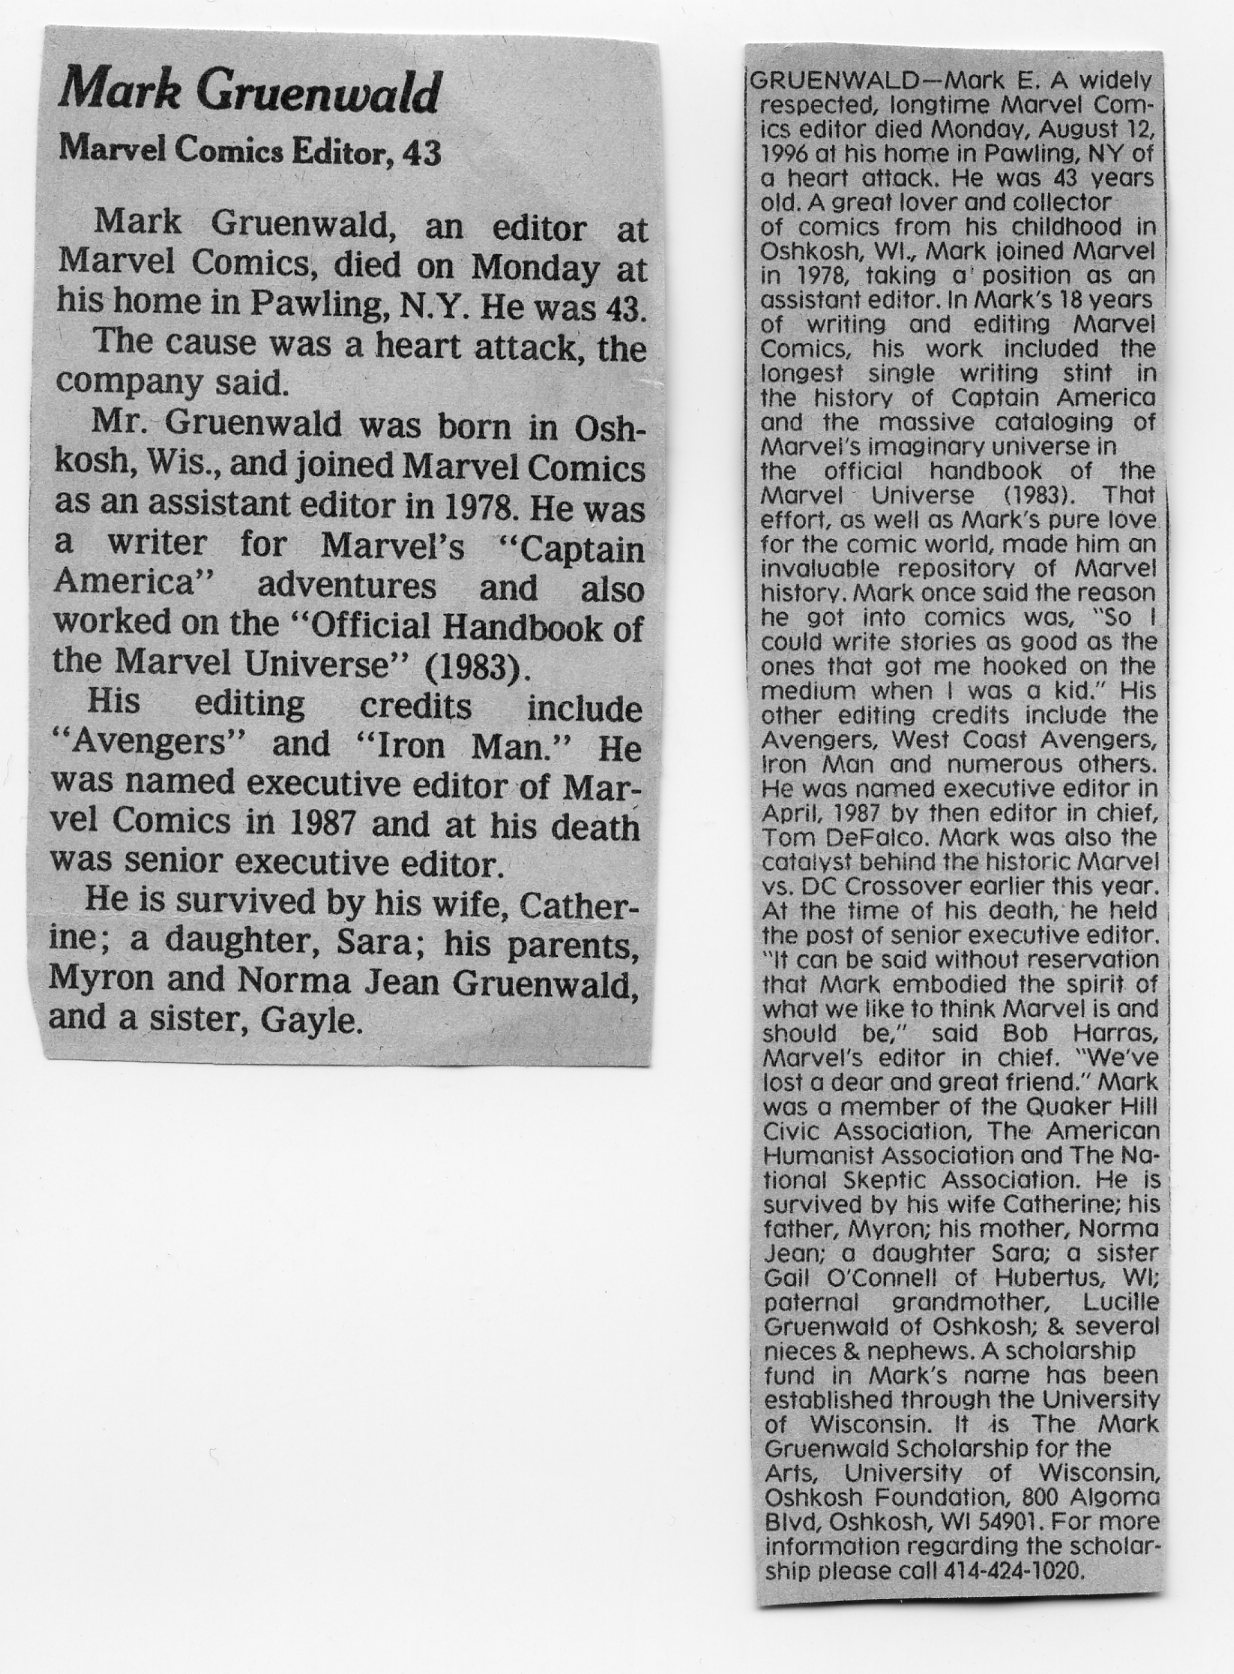 Mark Gruenwald New York Times Obituary